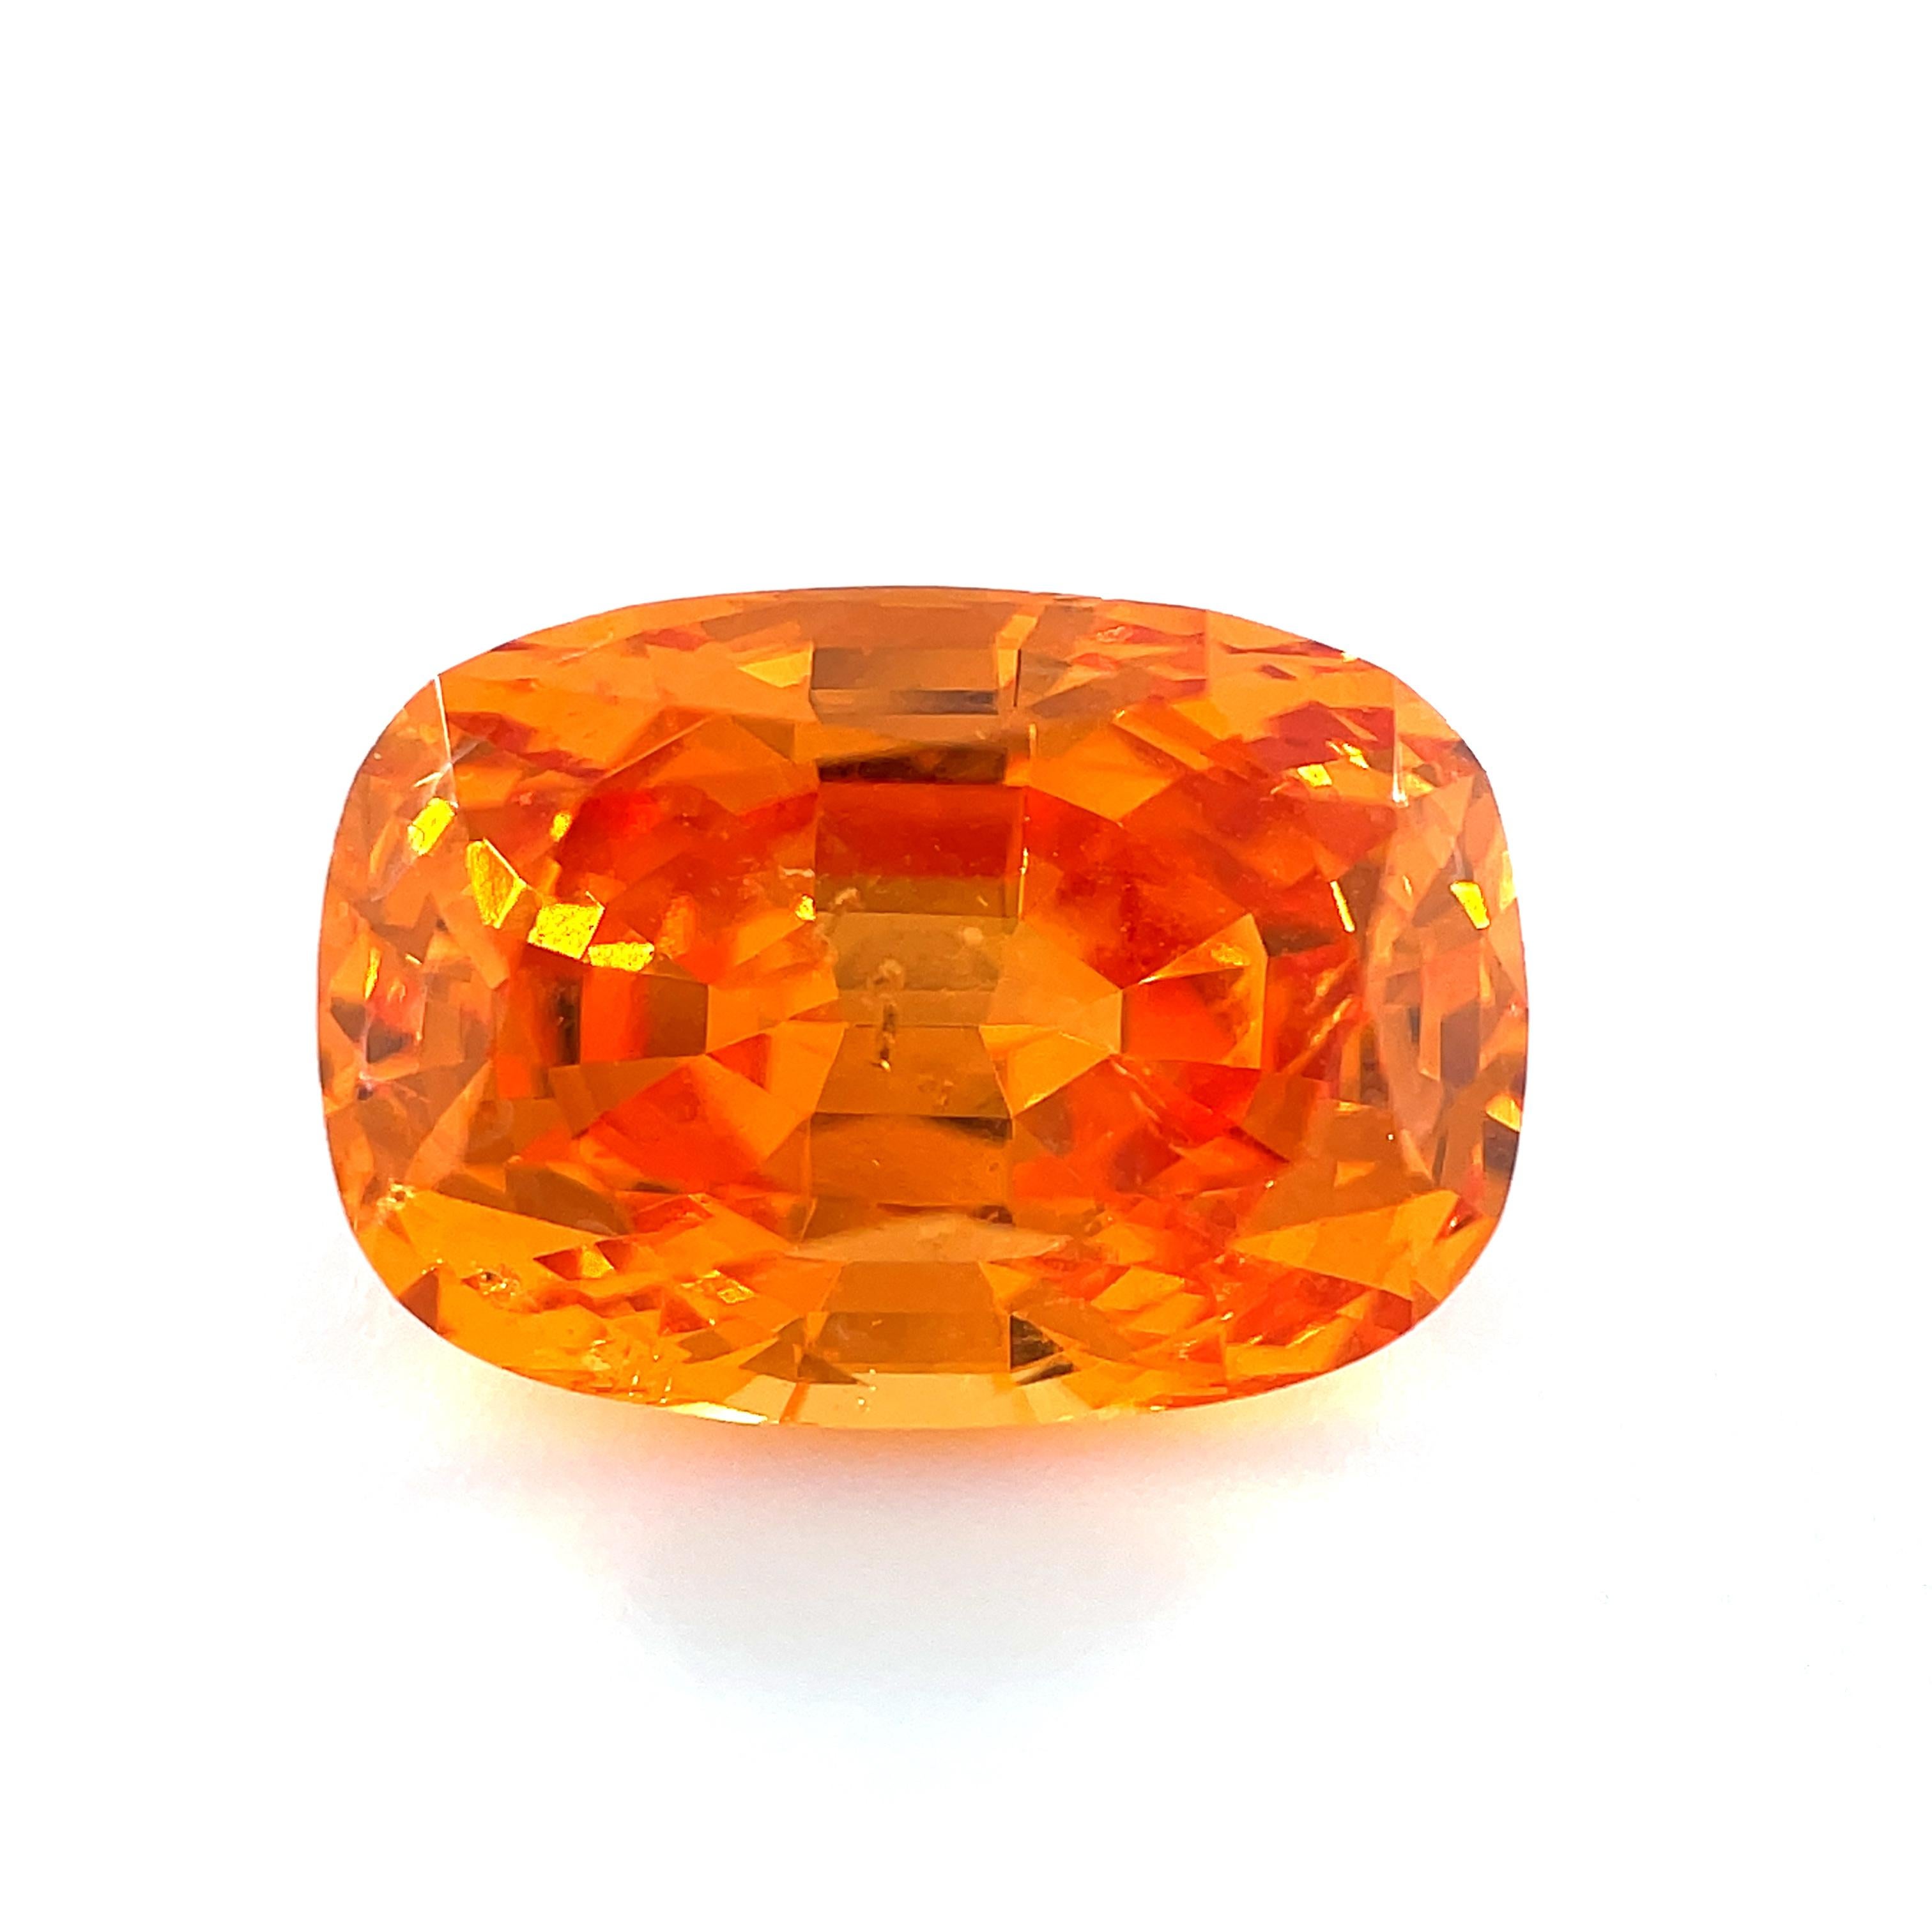 Women's or Men's Loose Spessartite Mandarin Garnet, 4.97 Carats, Gemstone for Ring or Pendant For Sale